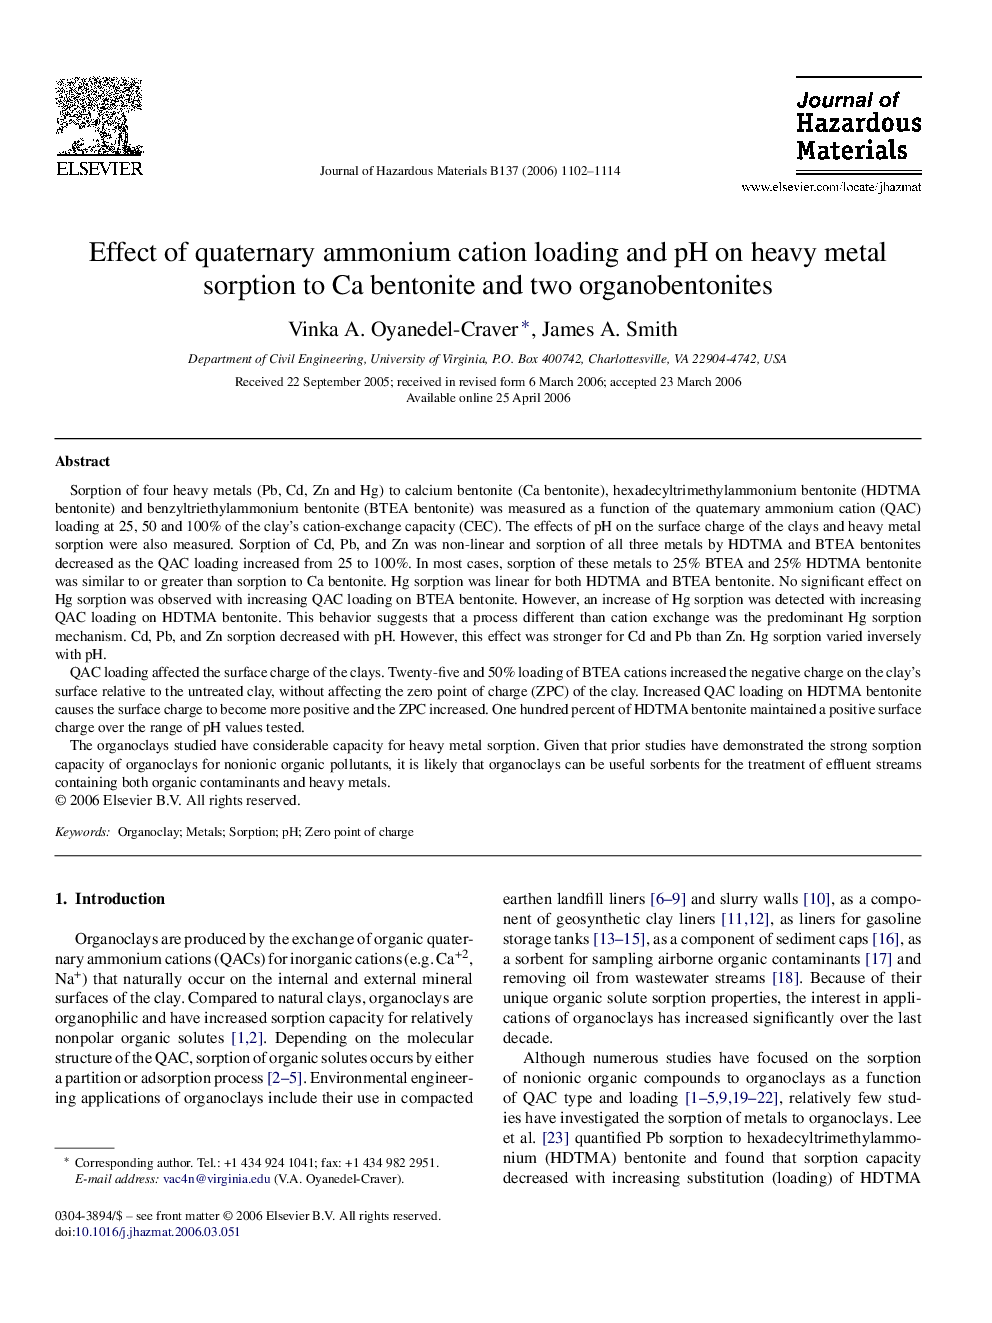 Effect of quaternary ammonium cation loading and pH on heavy metal sorption to Ca bentonite and two organobentonites